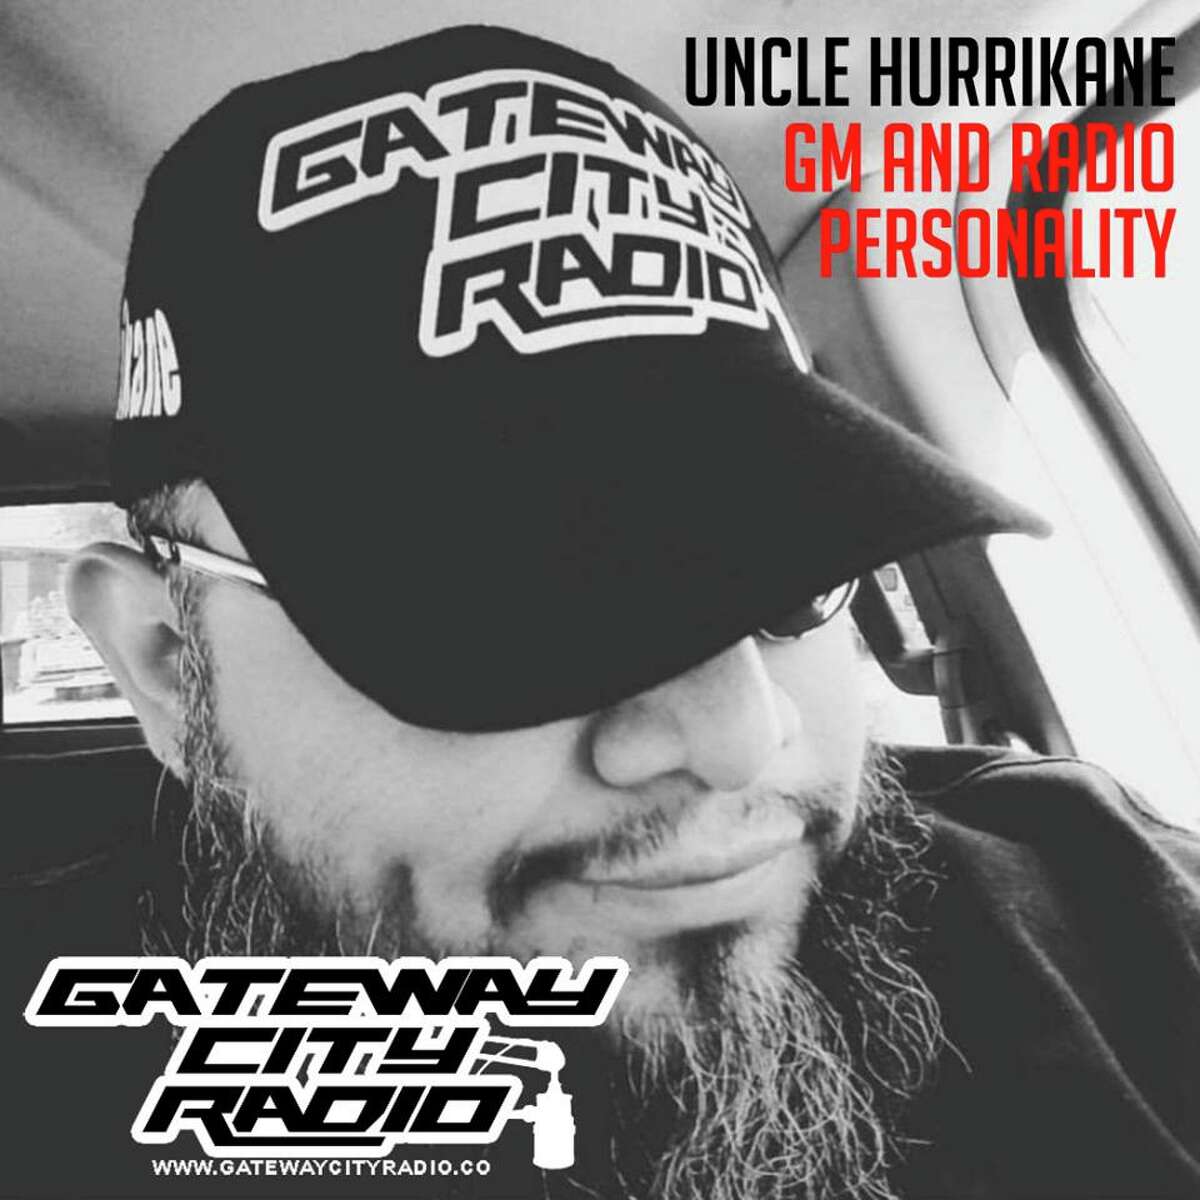 Name: Uncle Hurrikane  Station: Gateway City Radio 96.5